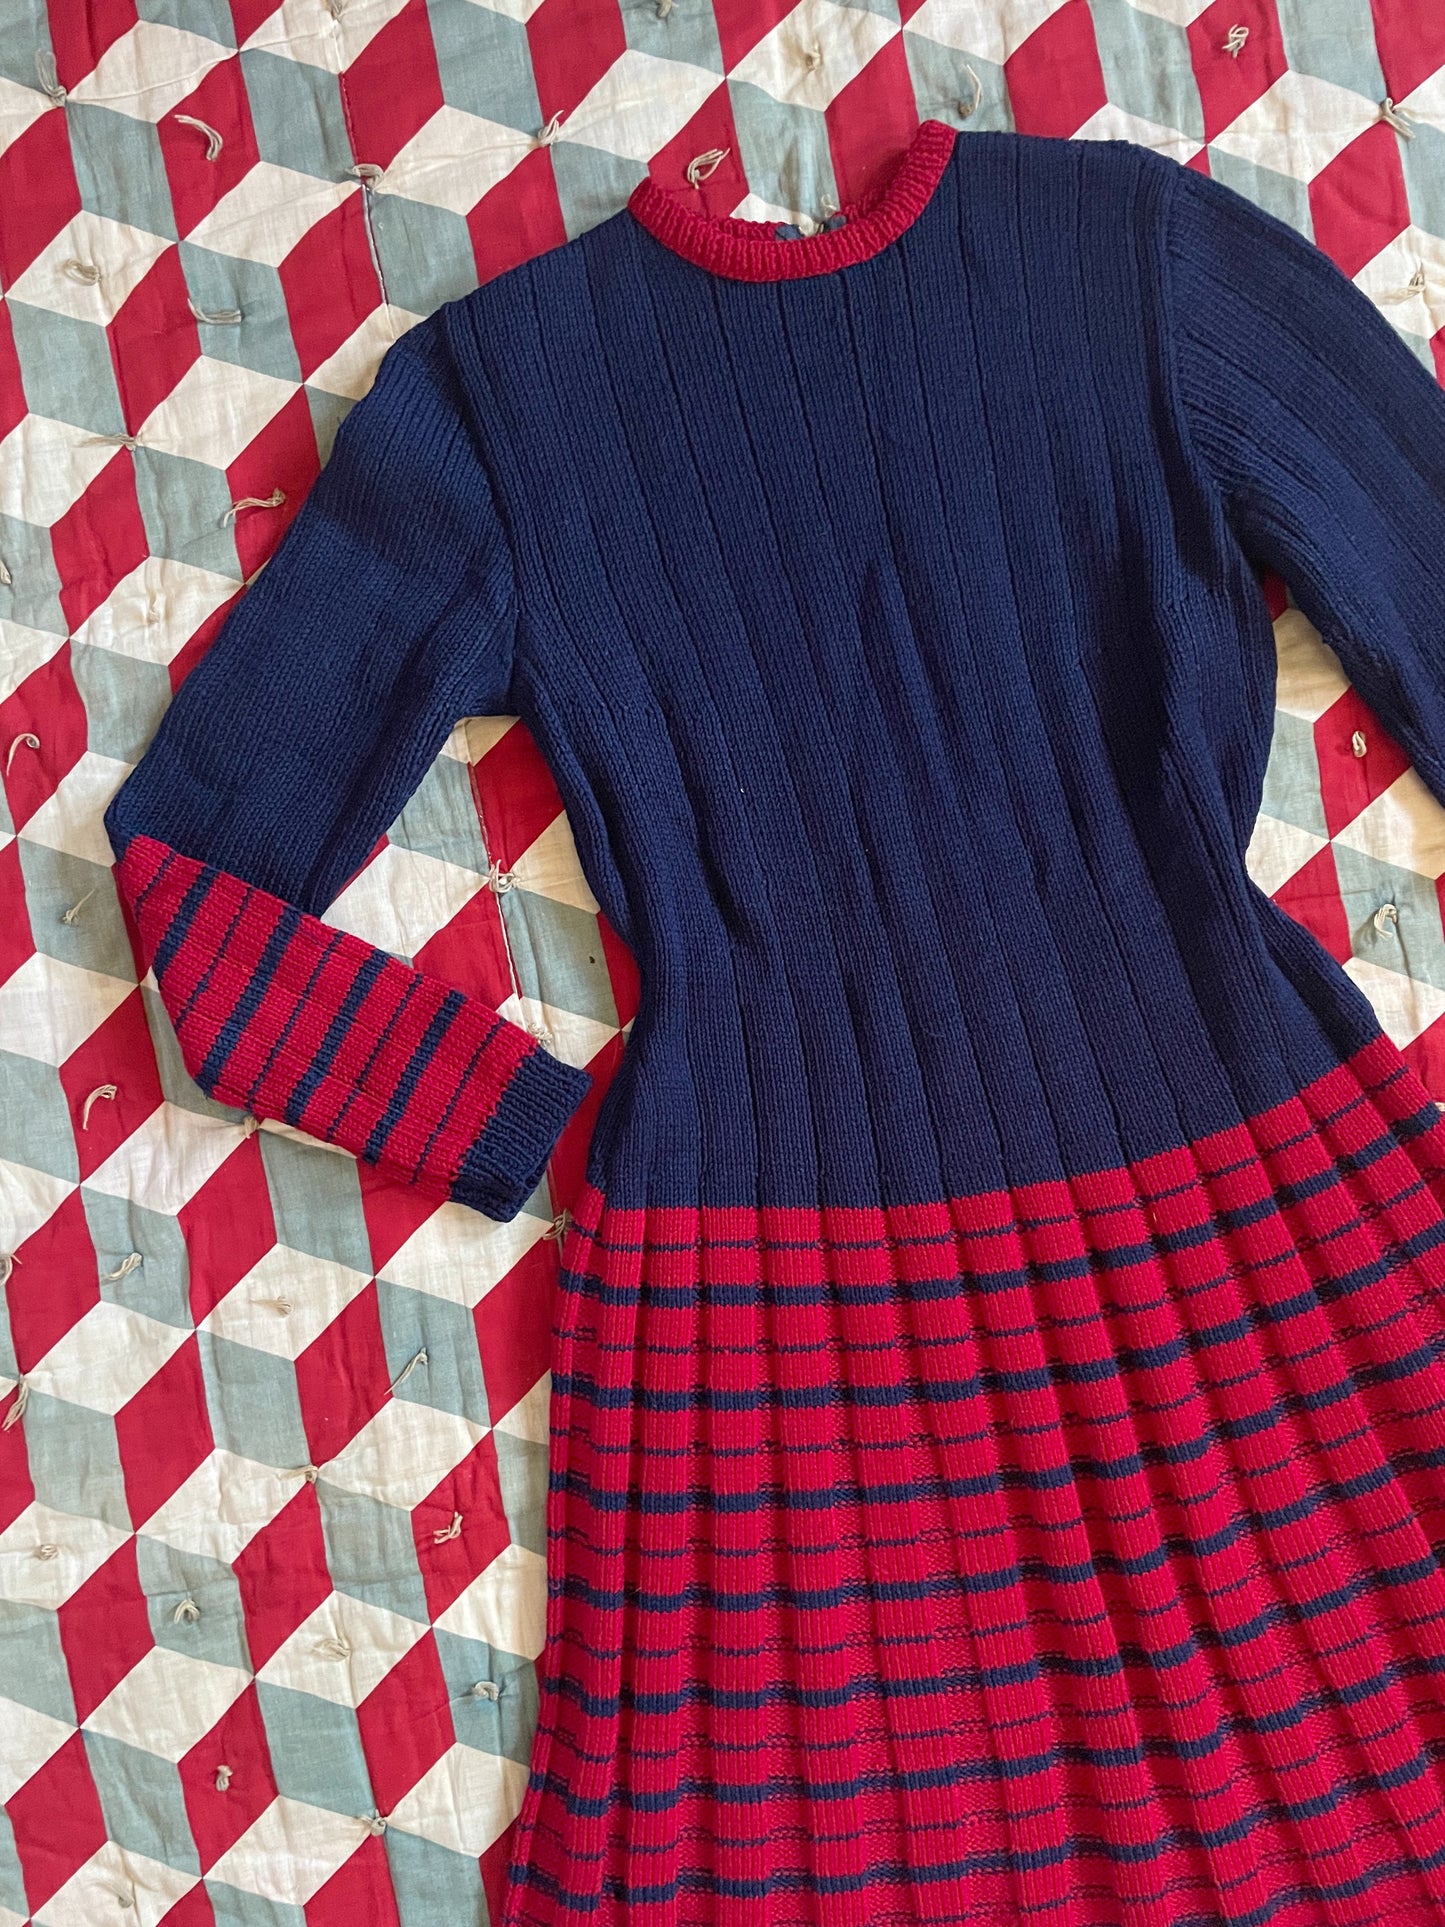 1960s Hand Knit Striped Dress